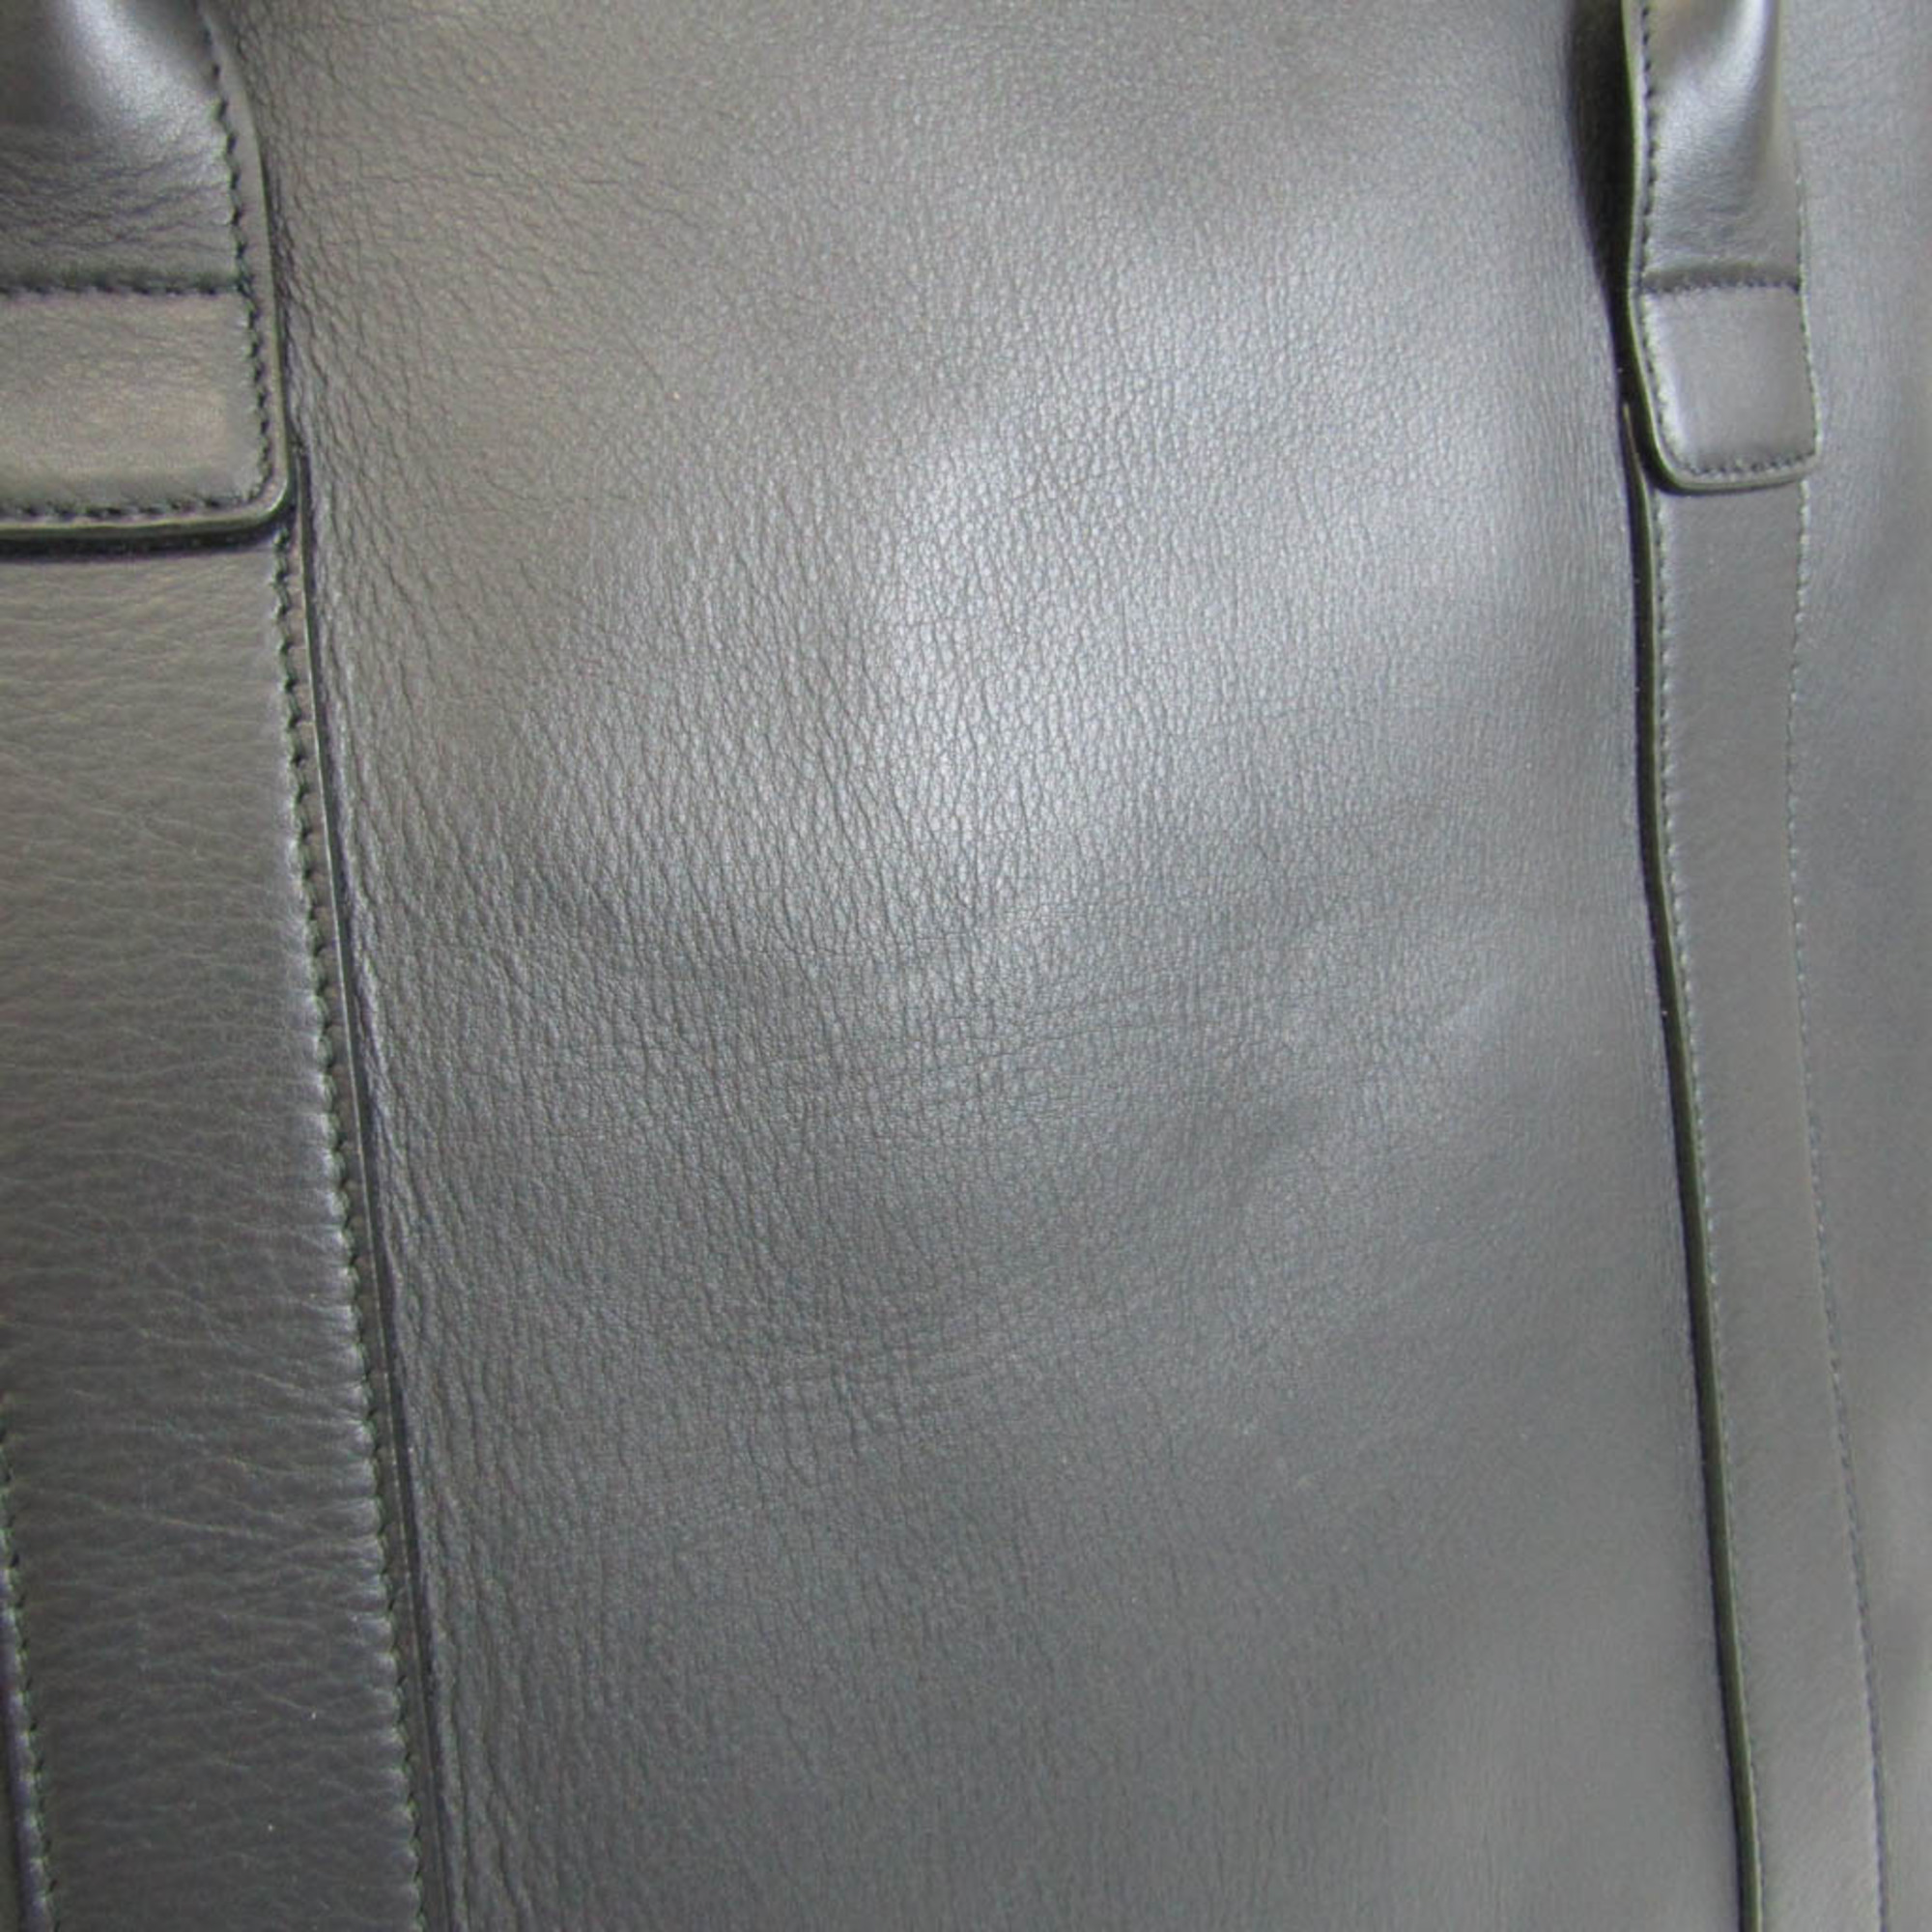 Salvatore Ferragamo Gancini EZ-21 D769 Women's Leather Tote Bag Black